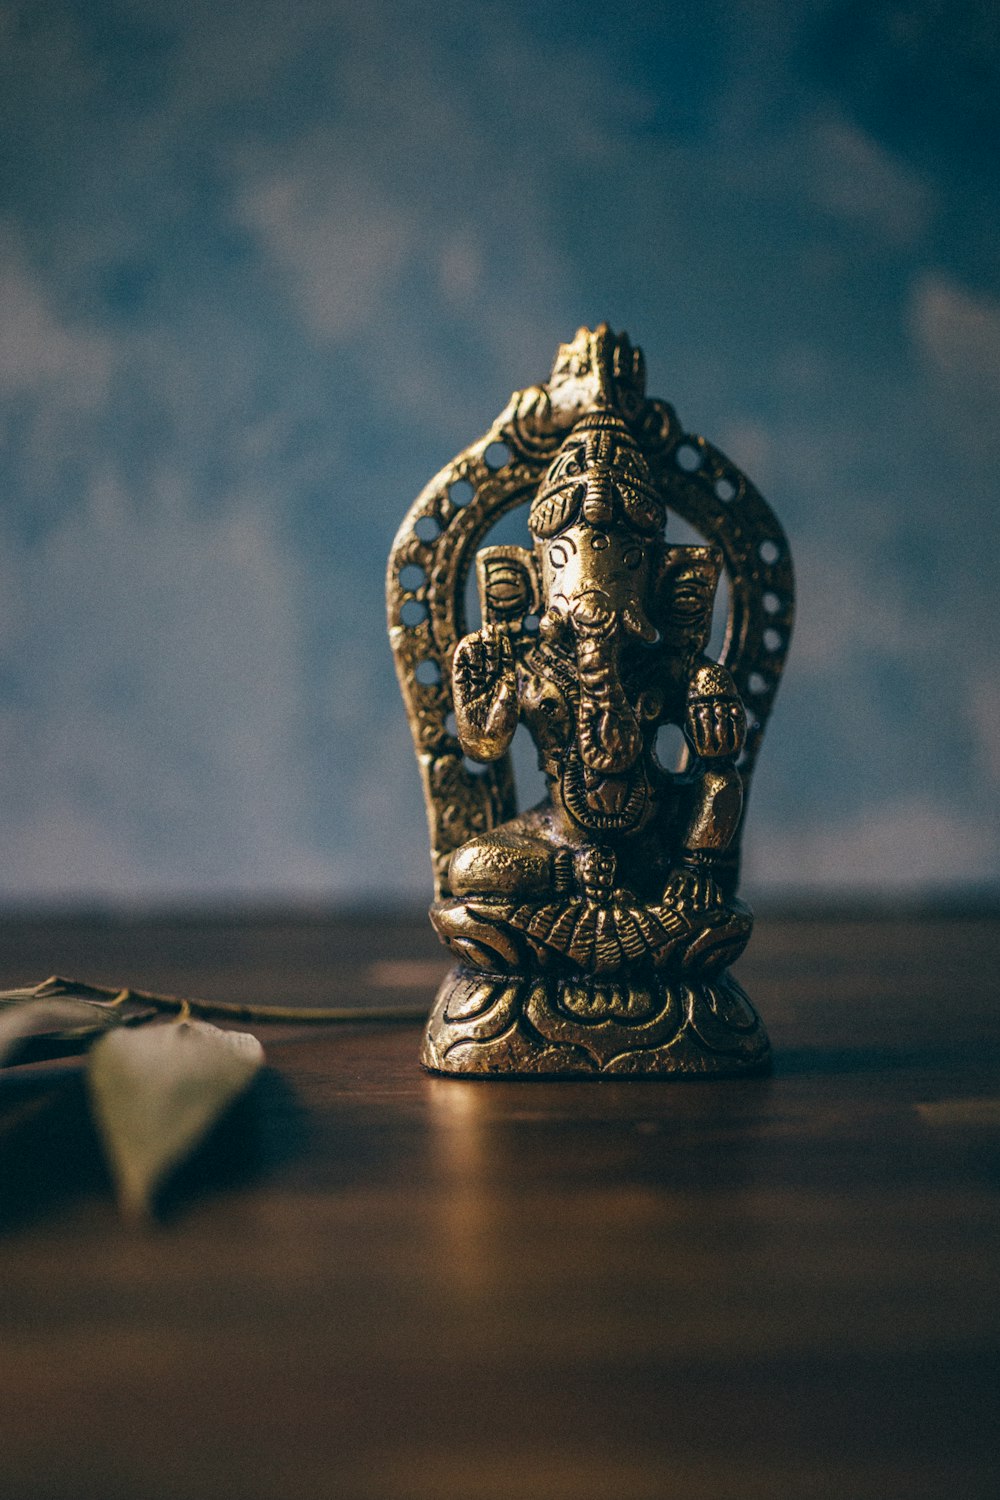 Ganesha figurine on brown surface